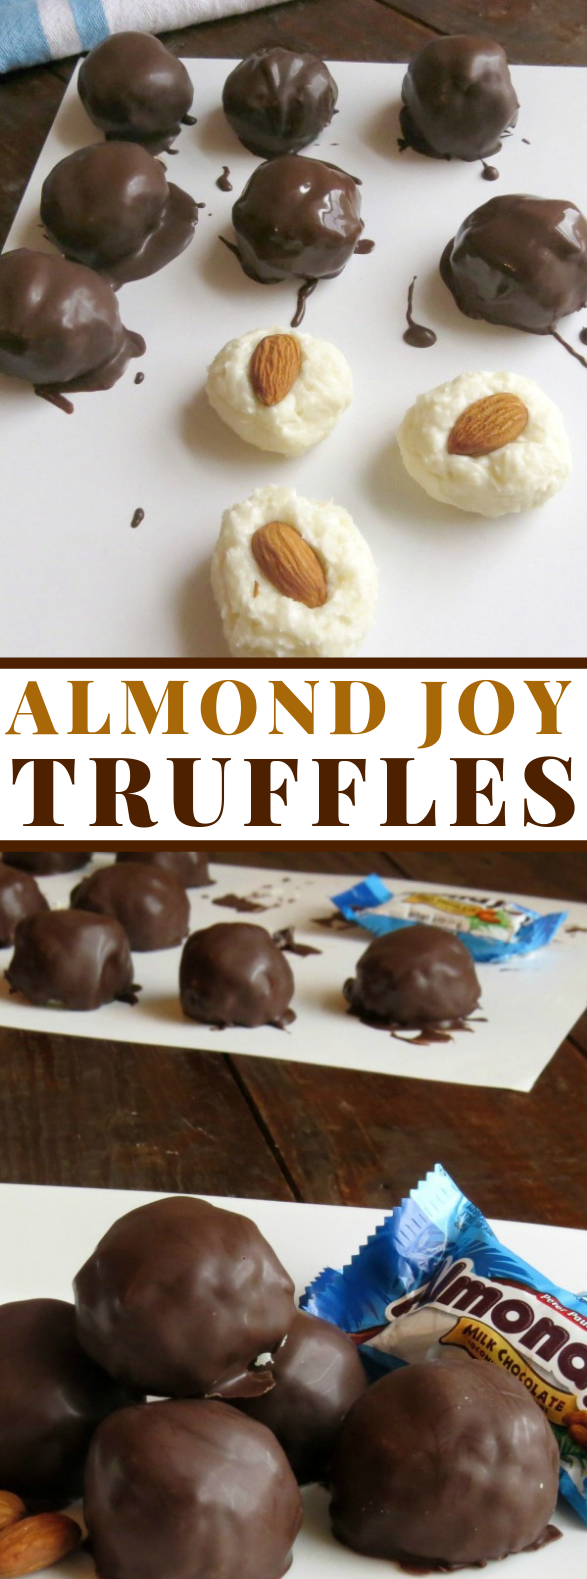 ALMOND JOY TRUFFLES RECIPE #chocolate #candy